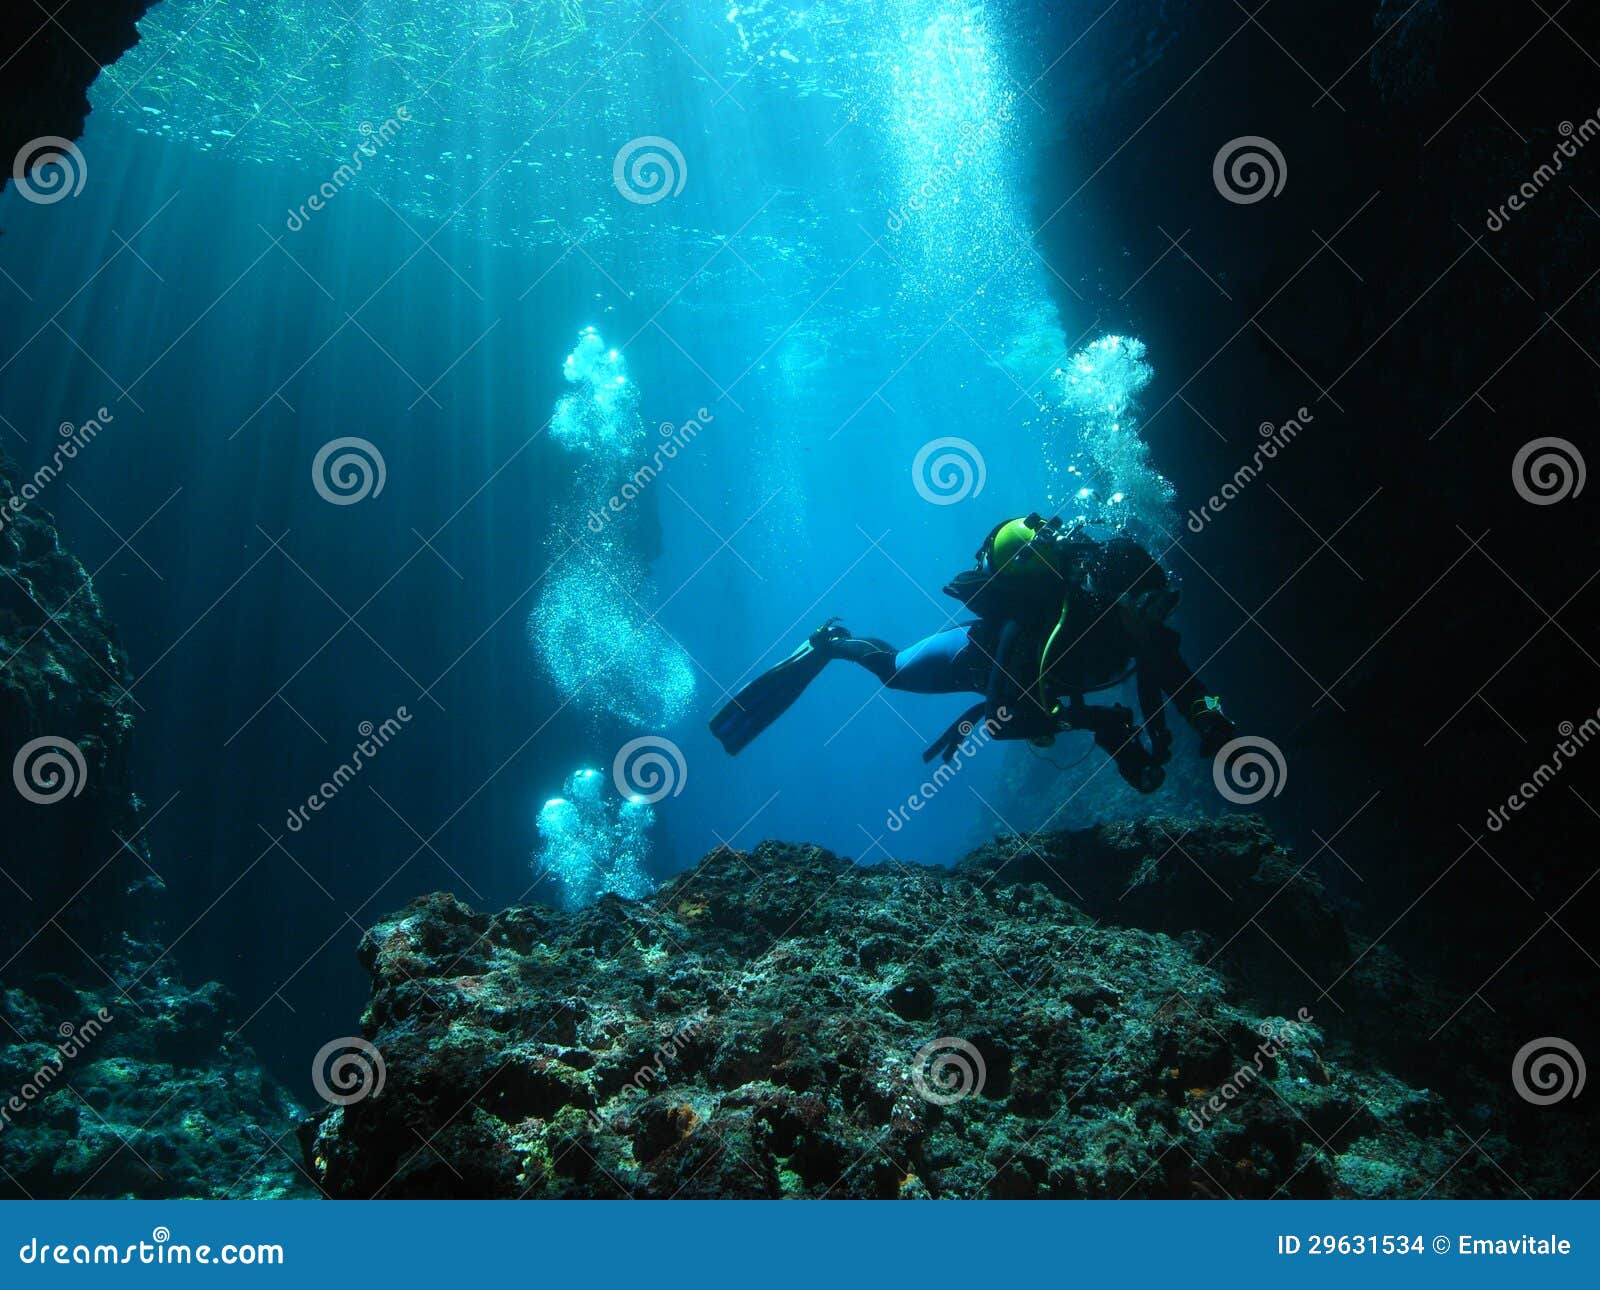 man underwater photographer scuba diving cave